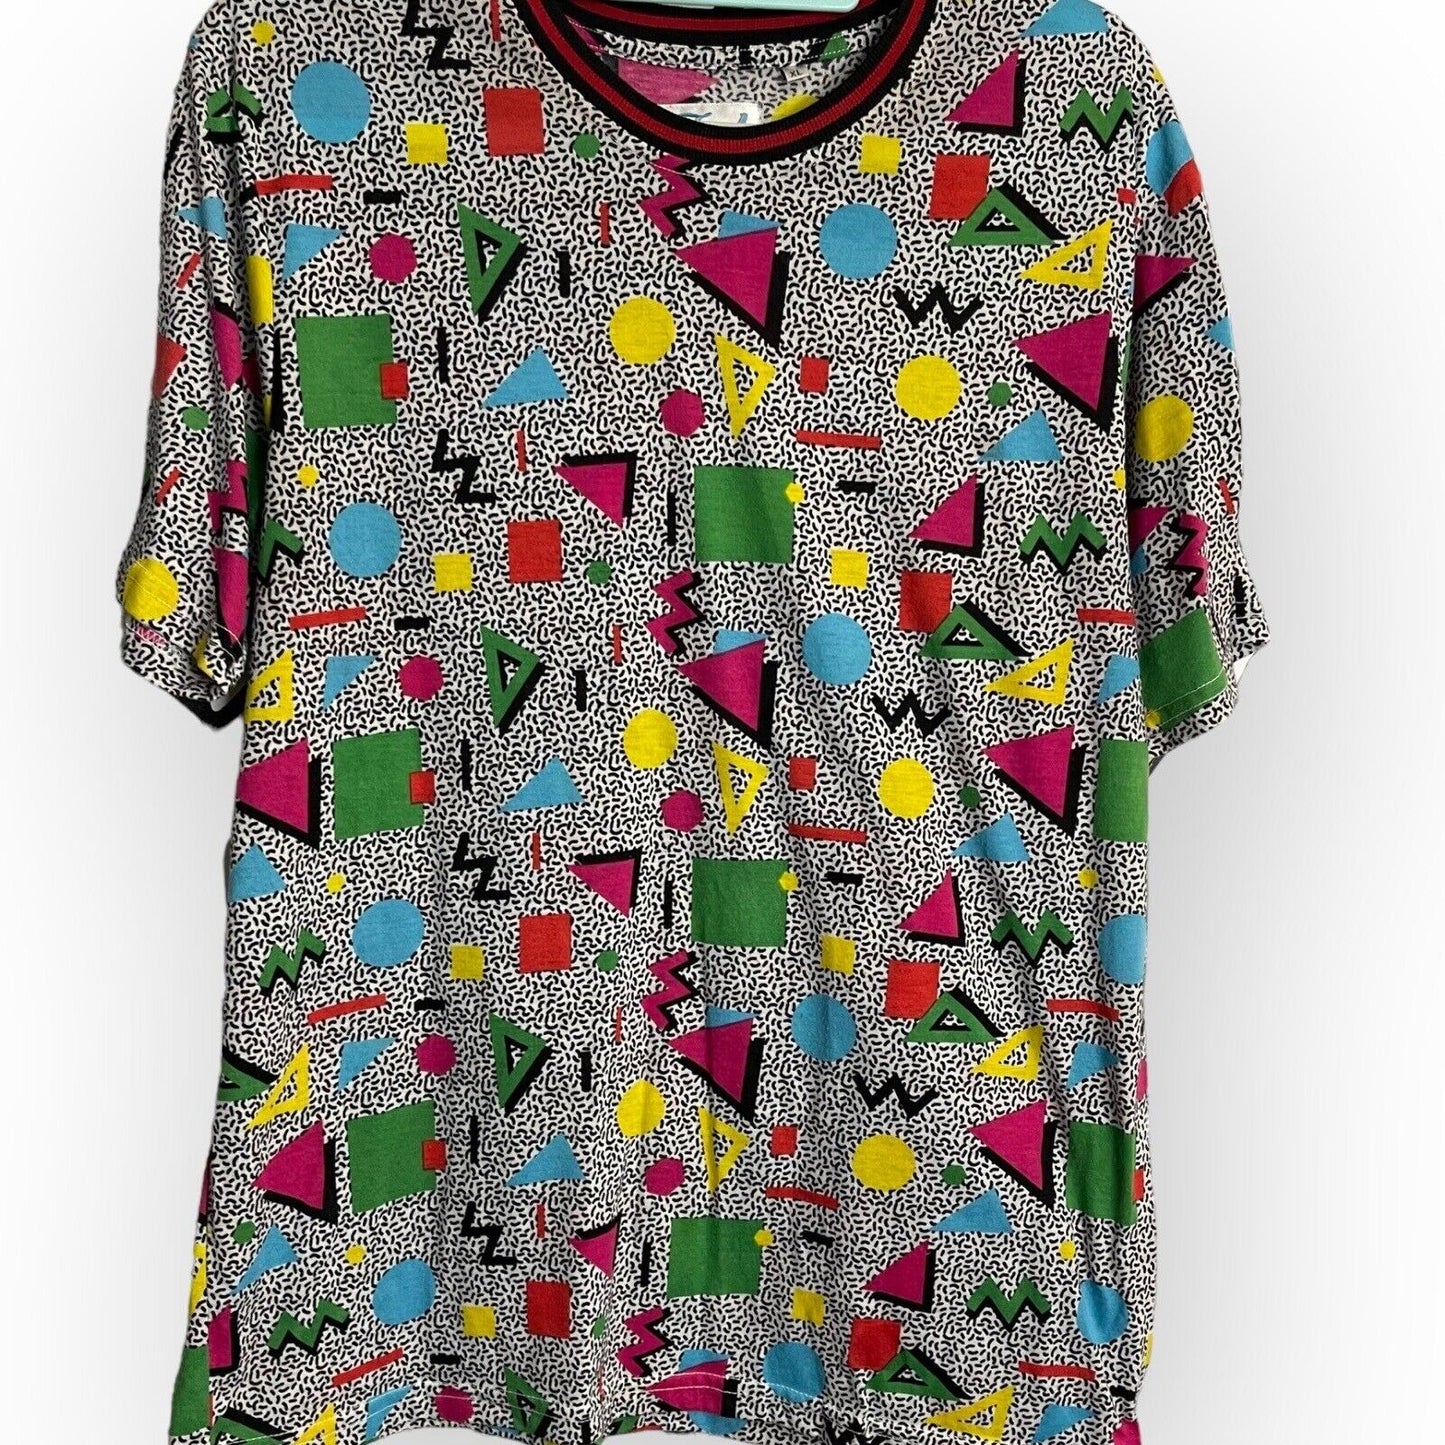 Fresh Prints Of Bel-Air Unisex Multicolored T-Shirt Size XL Geometric Print Top